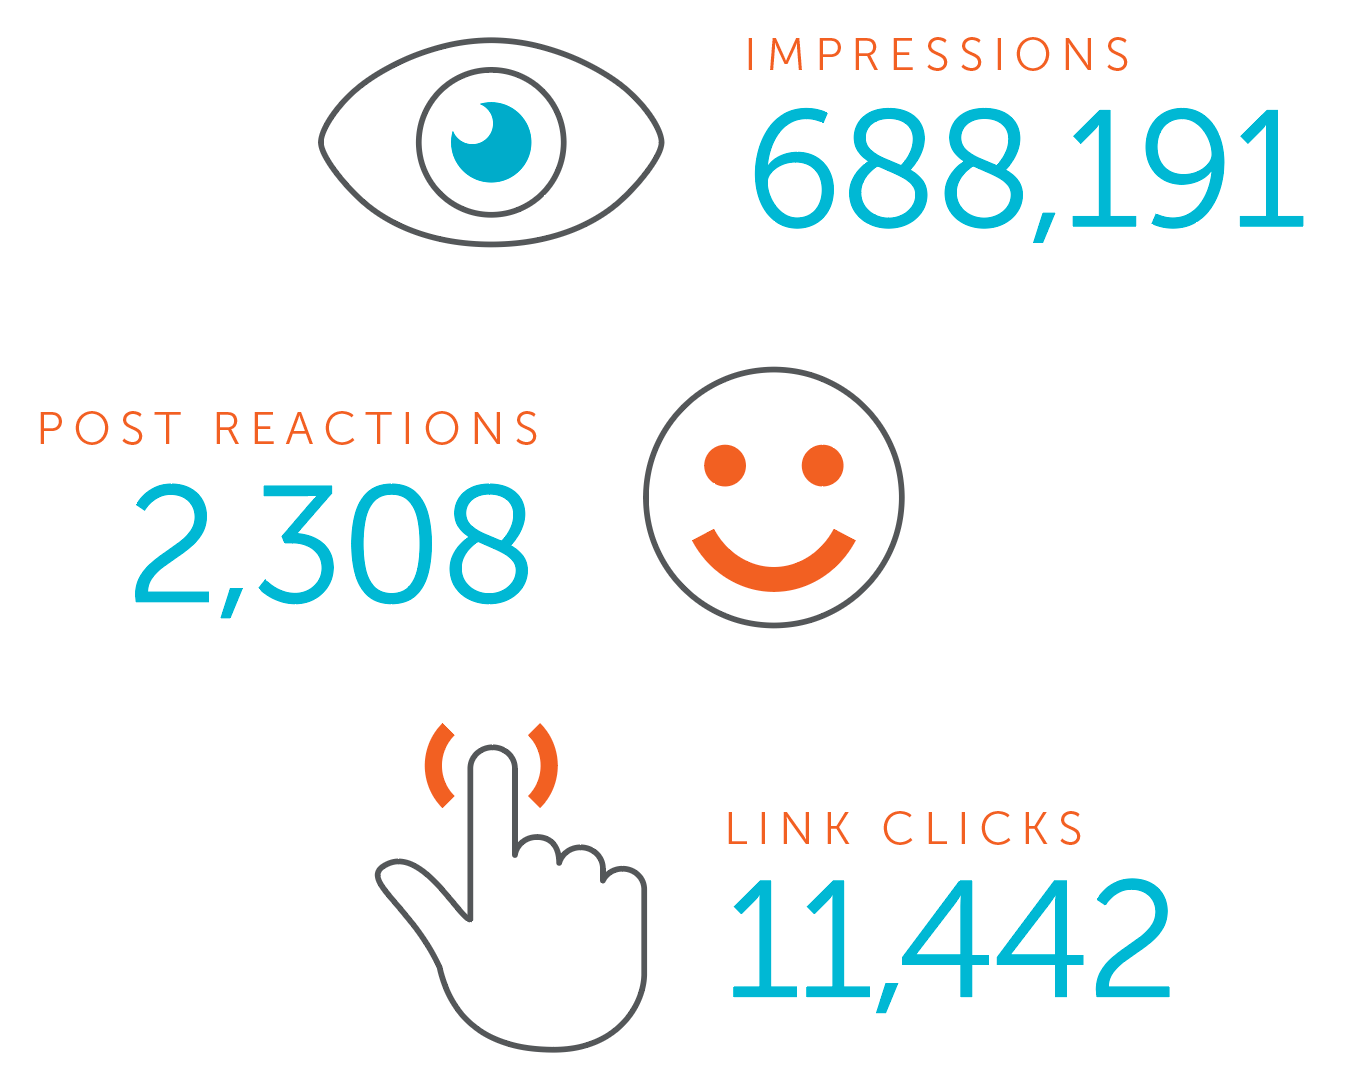 statistics of 688,191 impressions, 2,308 post reactions, and 11,442 clicks